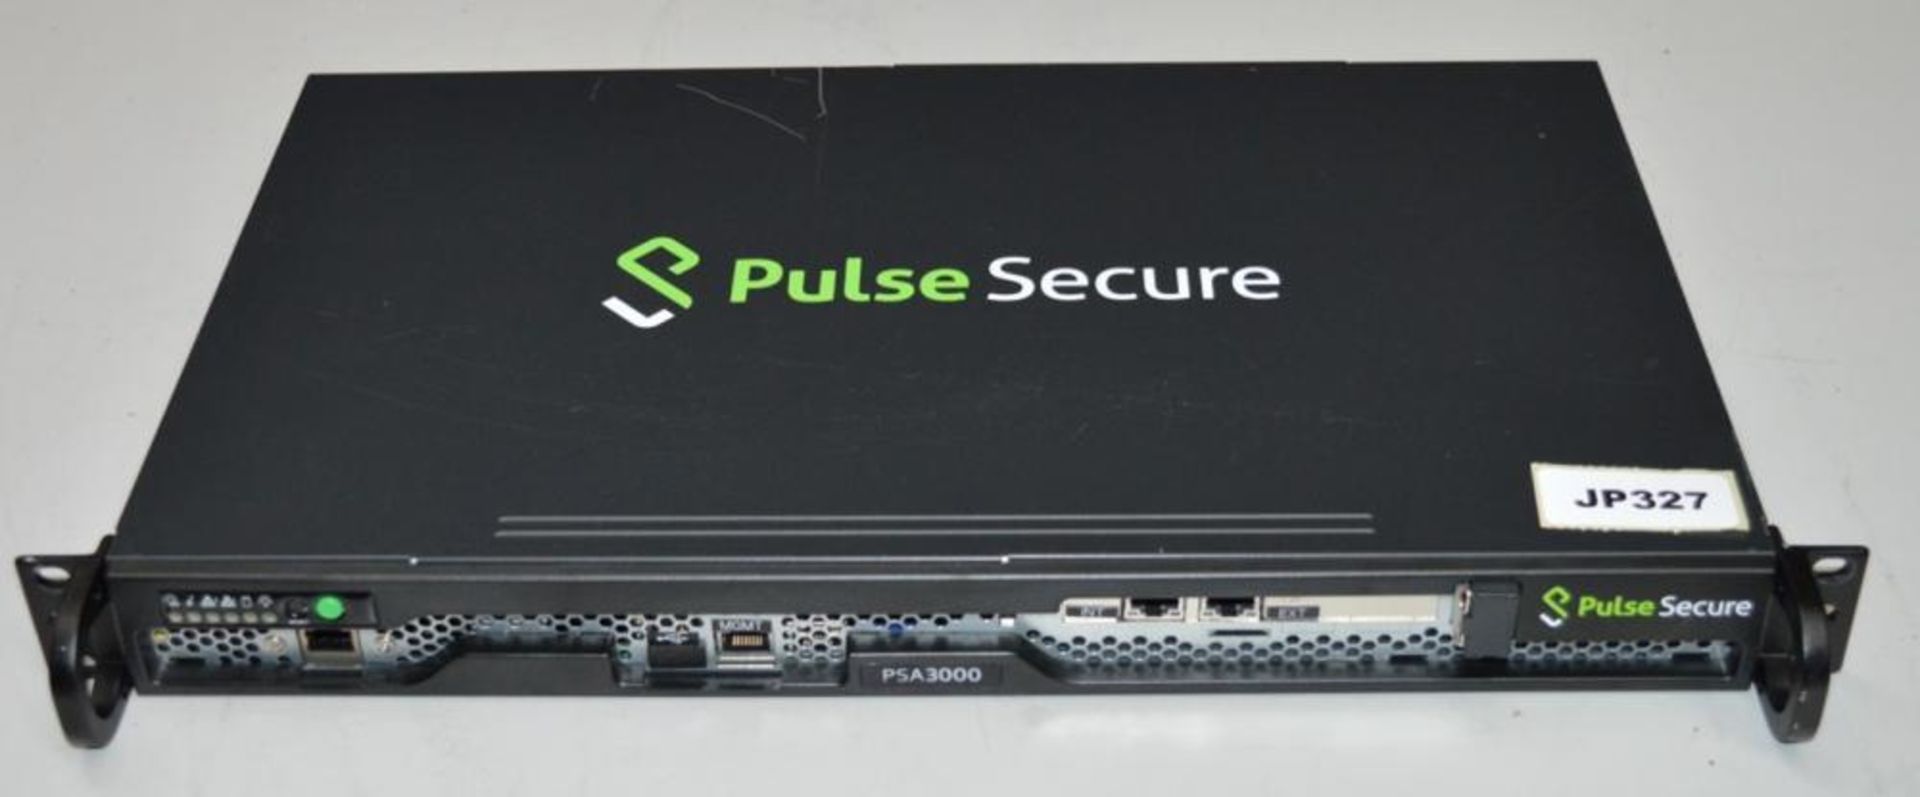 1 x Pulse Secure PSA3000 Security Appliance - CL285 - Ref JP327 F2 - Location: Altrincham WA14 - RRP